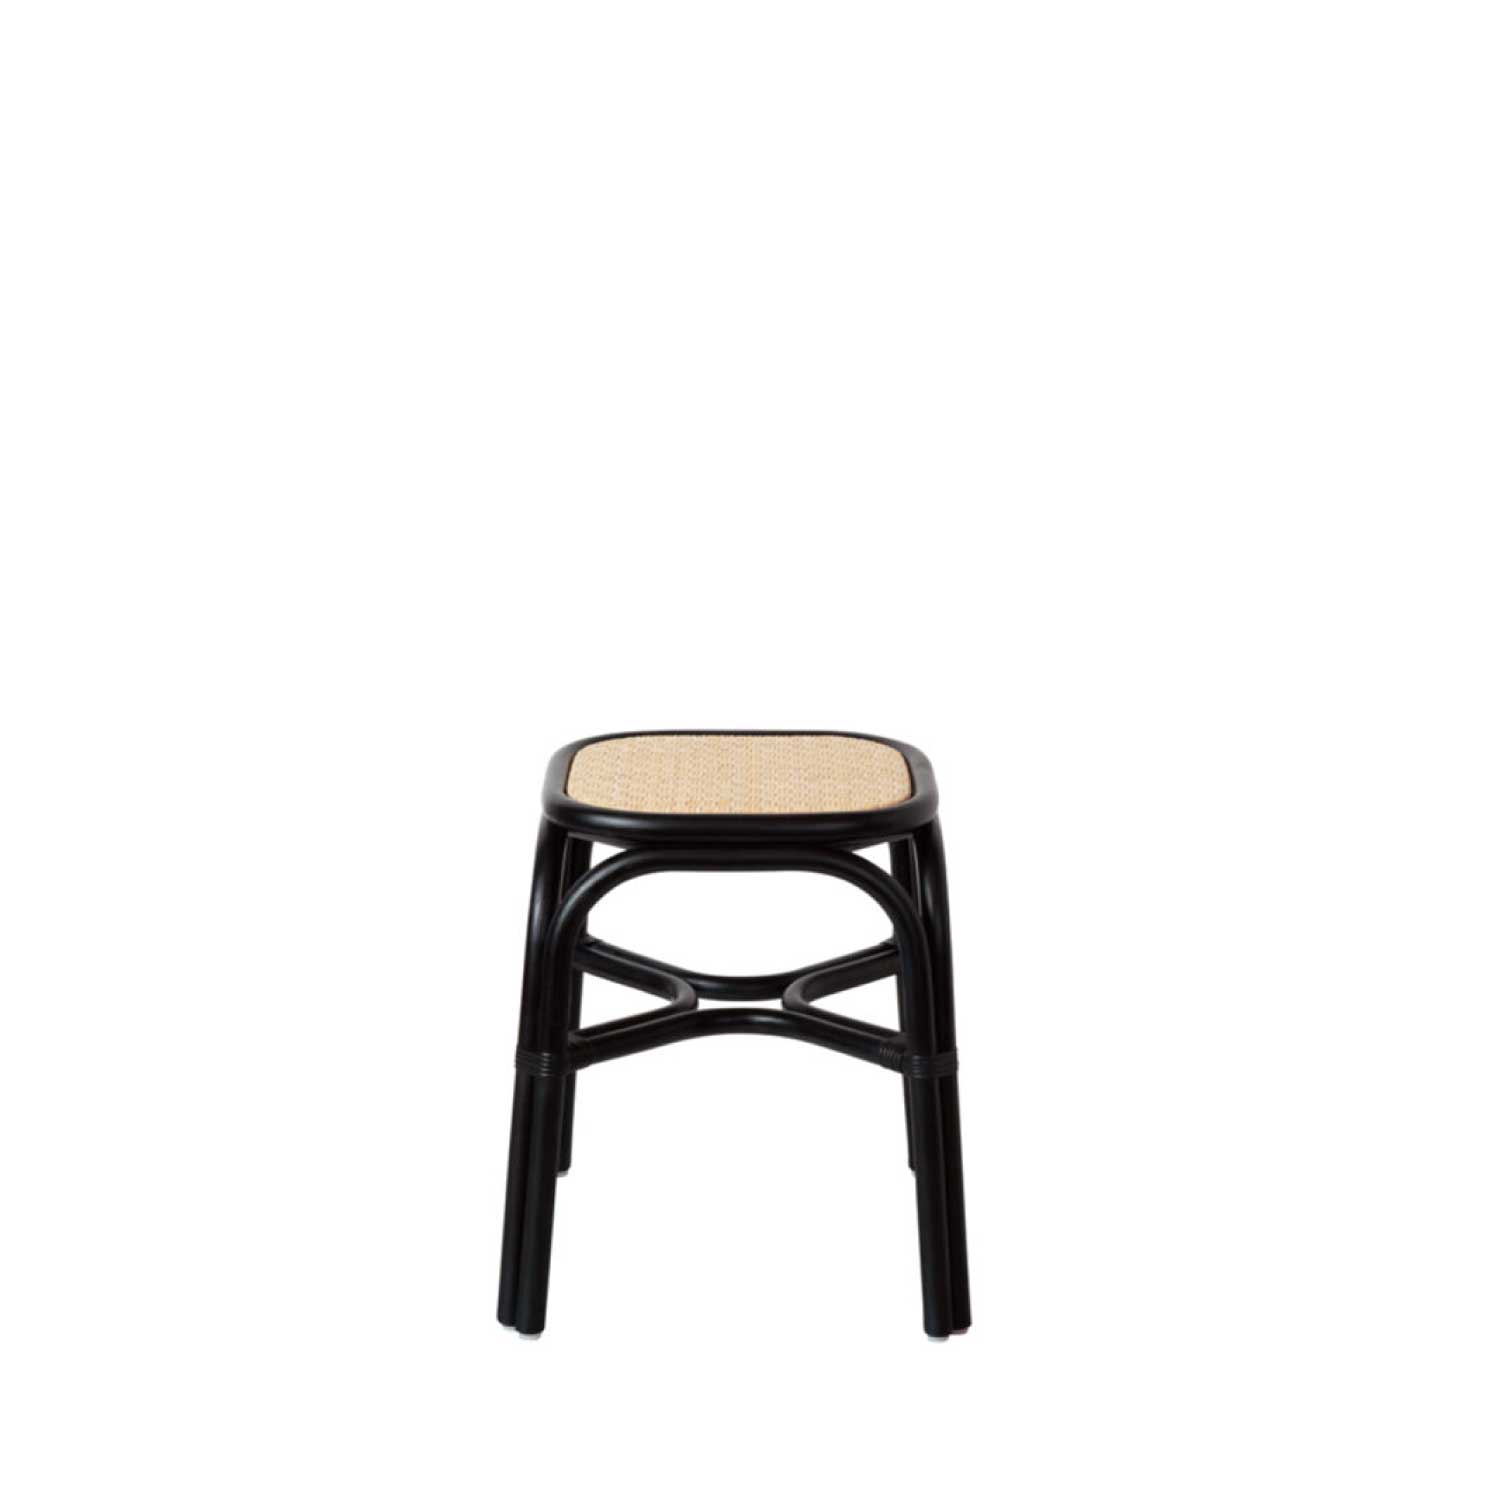 SR stool